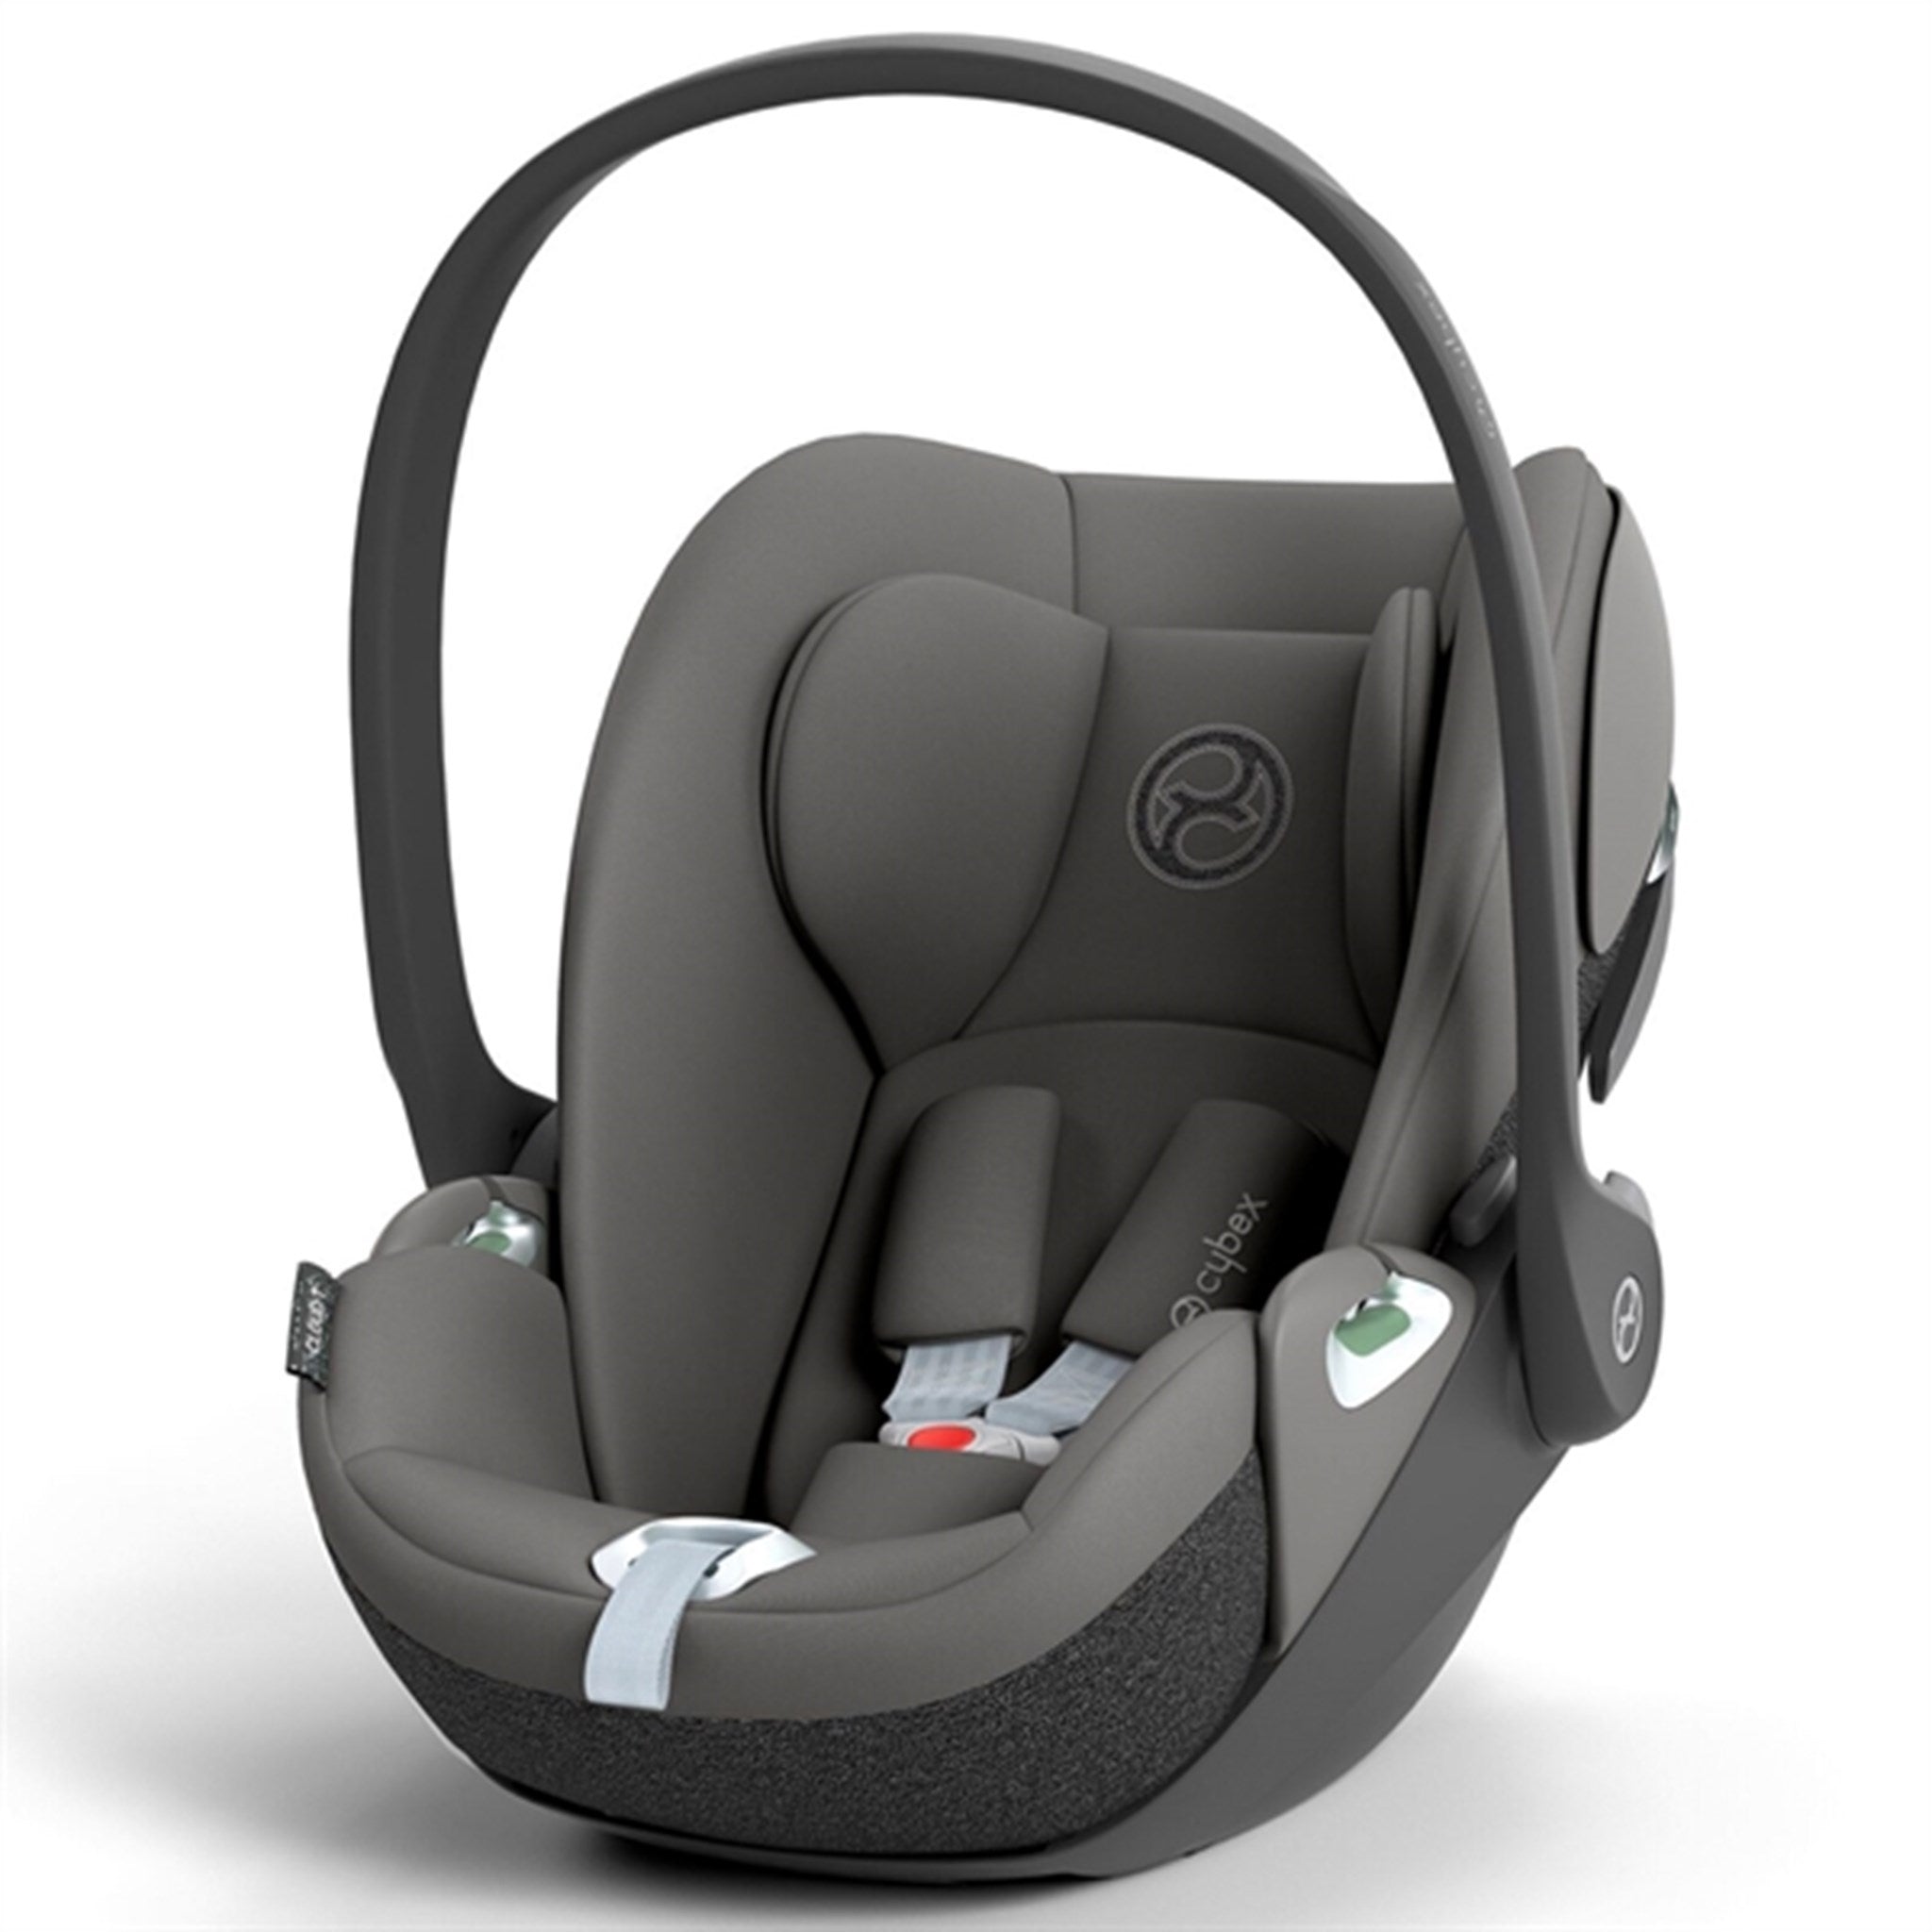 Cybex CLOUD T I-SIZE Mirage Grey Car Seat